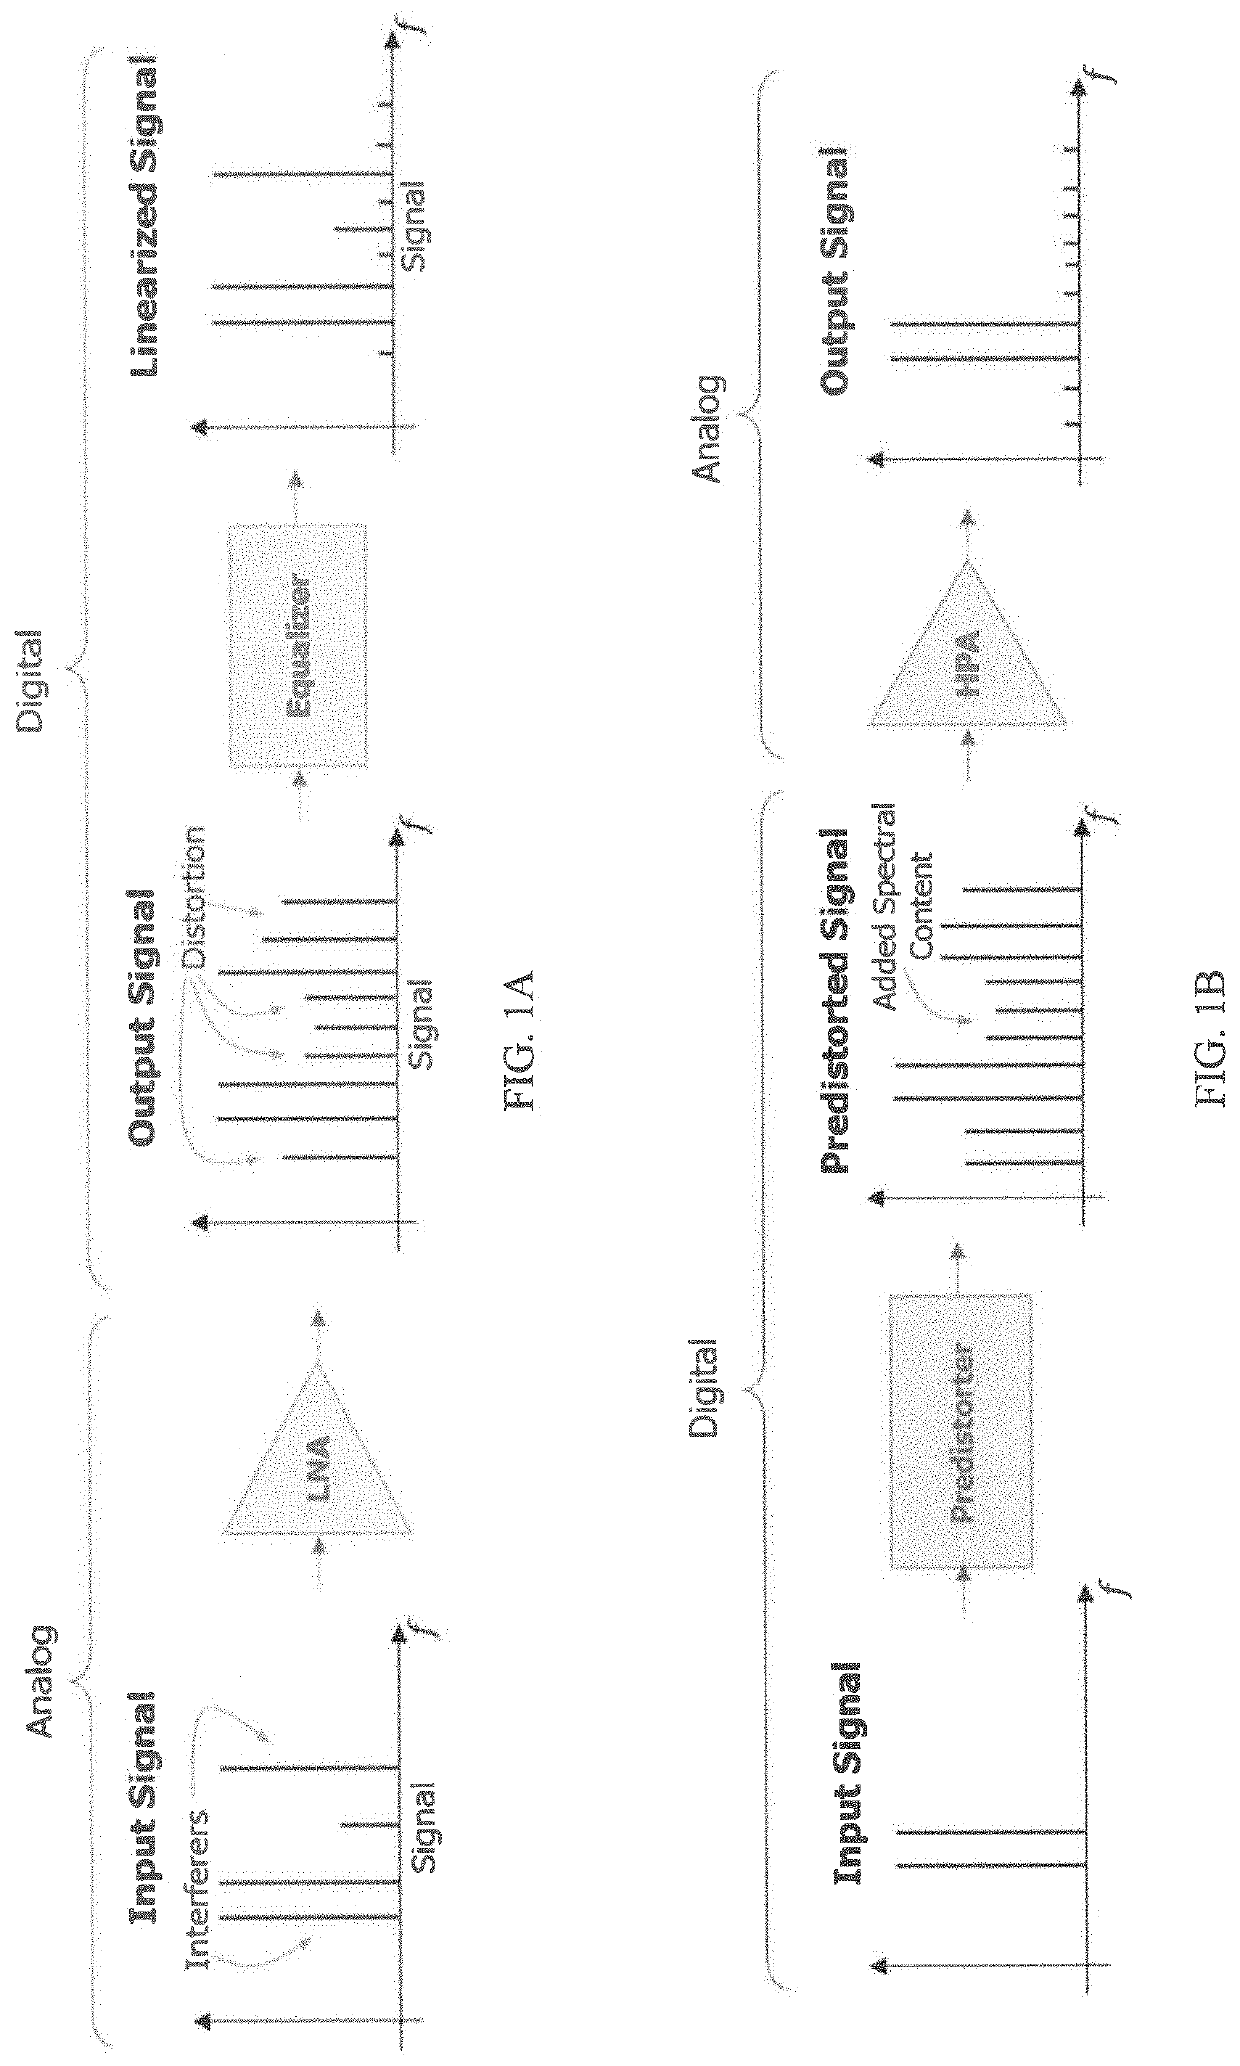 Modular multi-channel RF calibration architecture for linearization